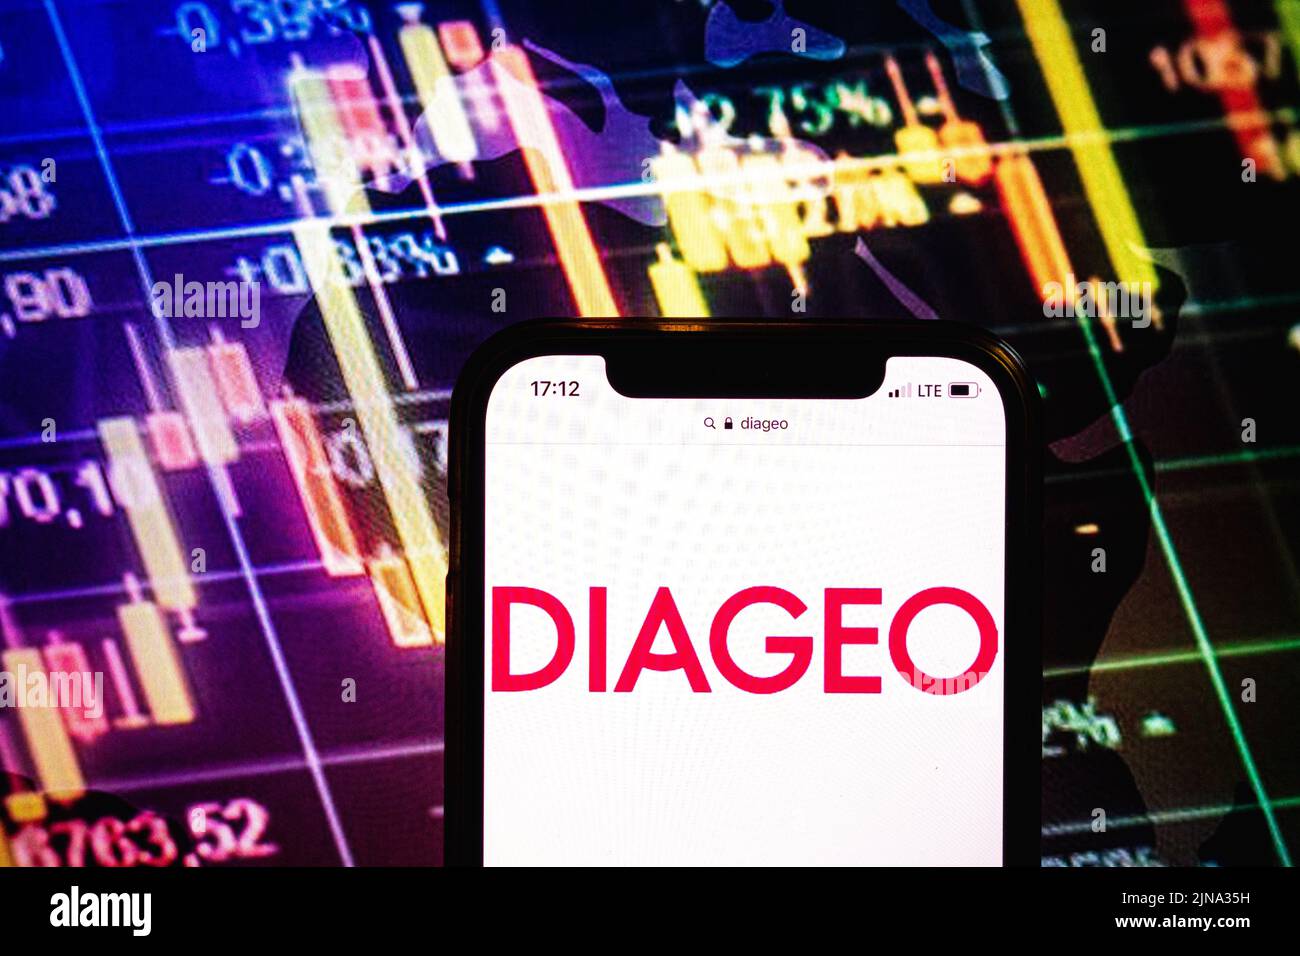 KONSKIE, POLAND - August 09, 2022: Smartphone displaying logo of Diageo company on stock exchange diagram background Stock Photo